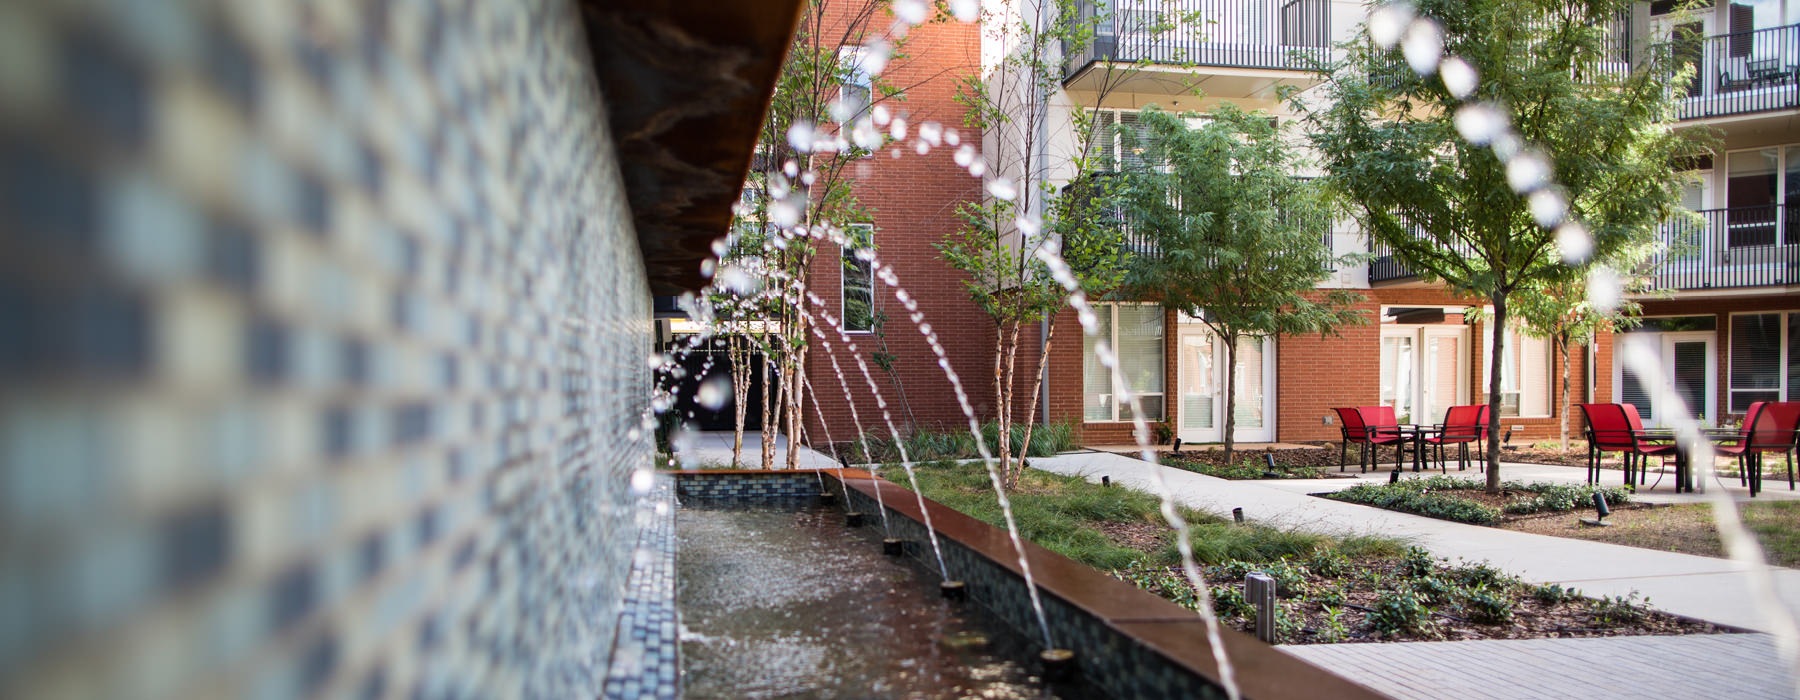 water fountains along the courtyard sidewalk